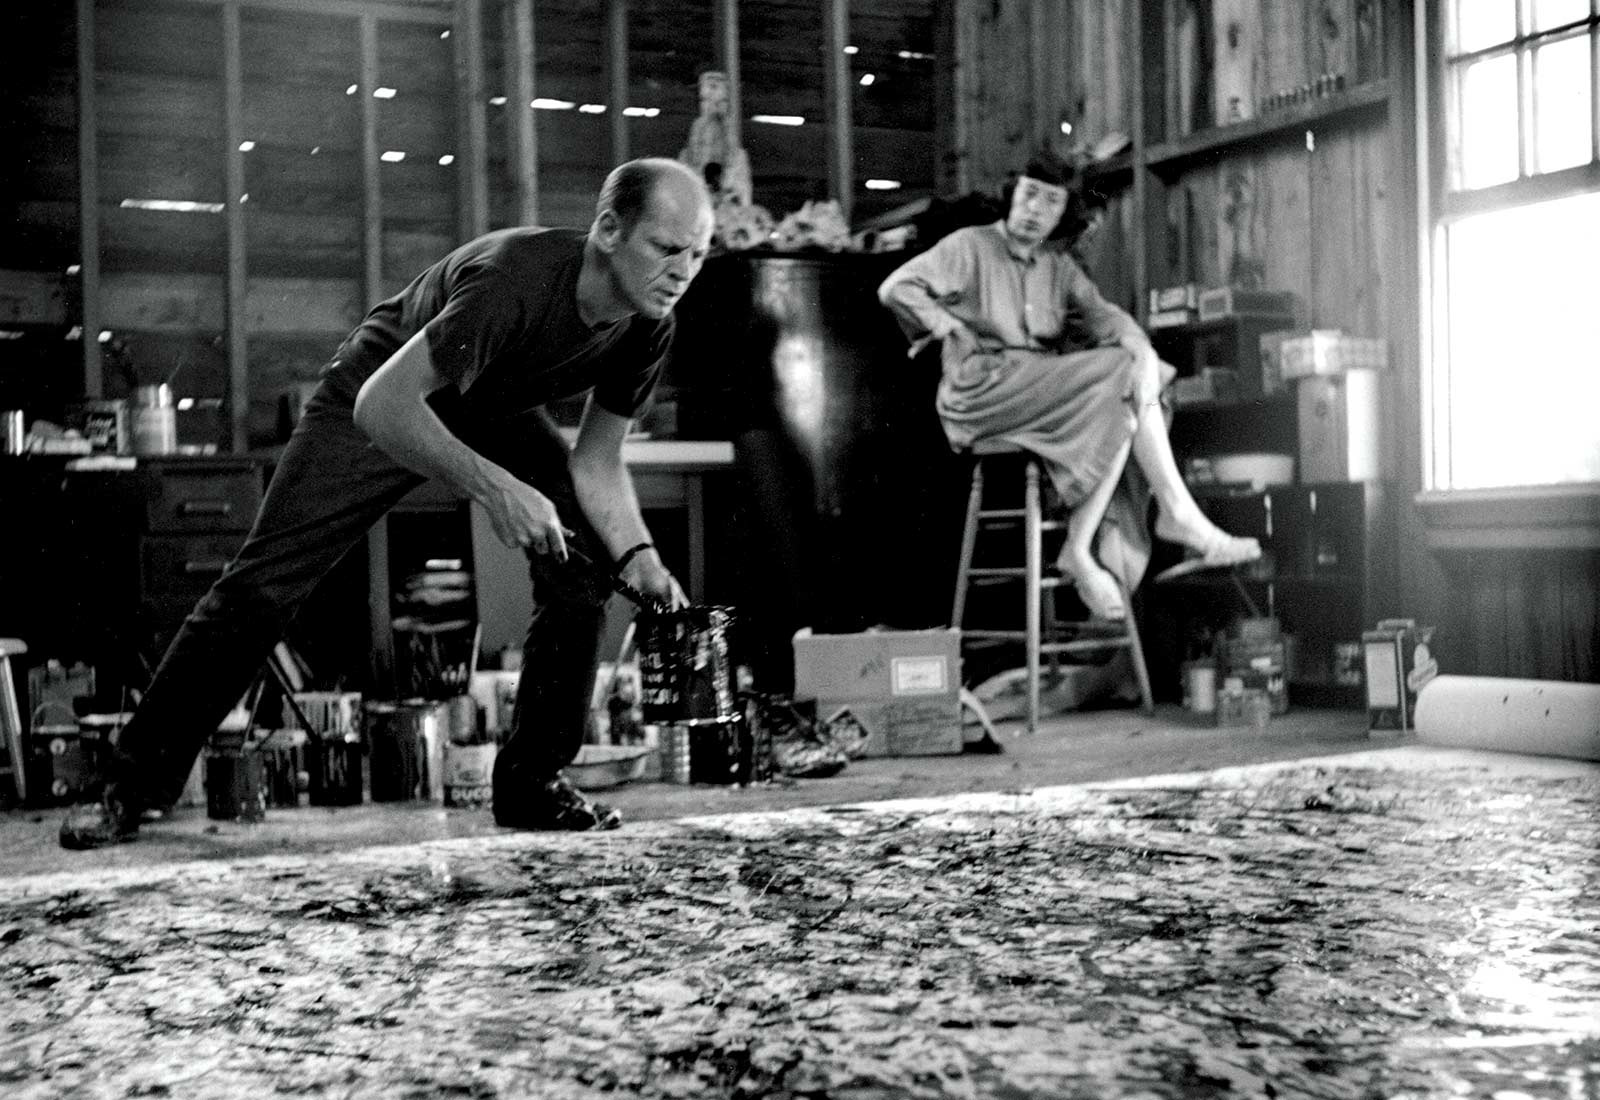 Pollock-Krasner House - the studio of Lee Krasner and Jackson Pollock